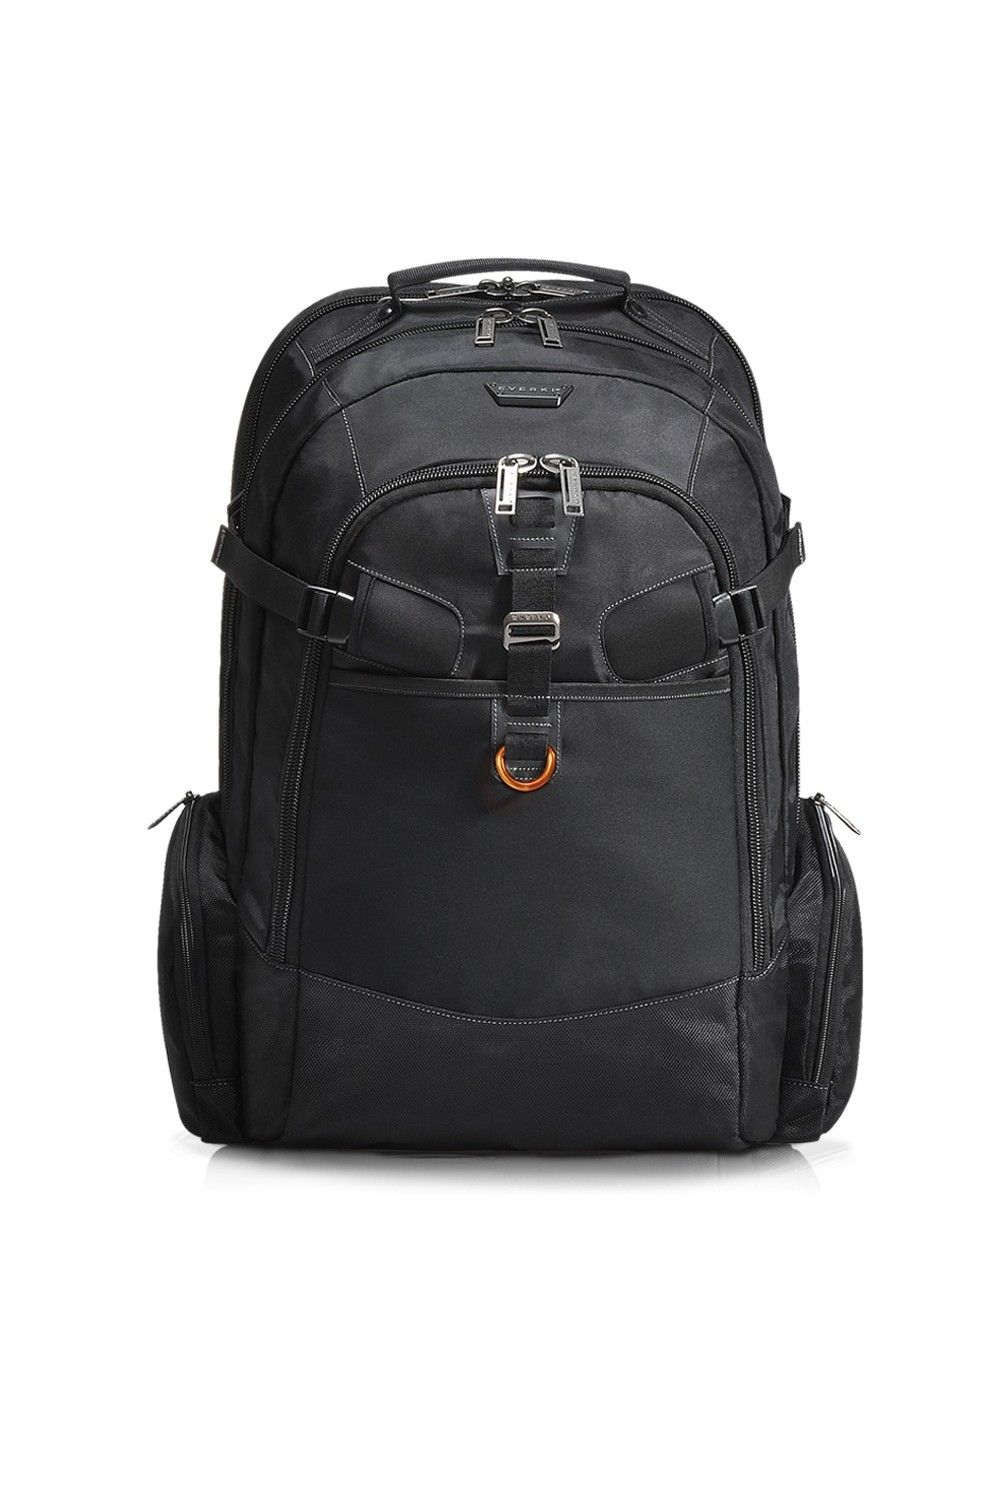 Laptop Backpack Titan Everki 13 - 18.4 inch